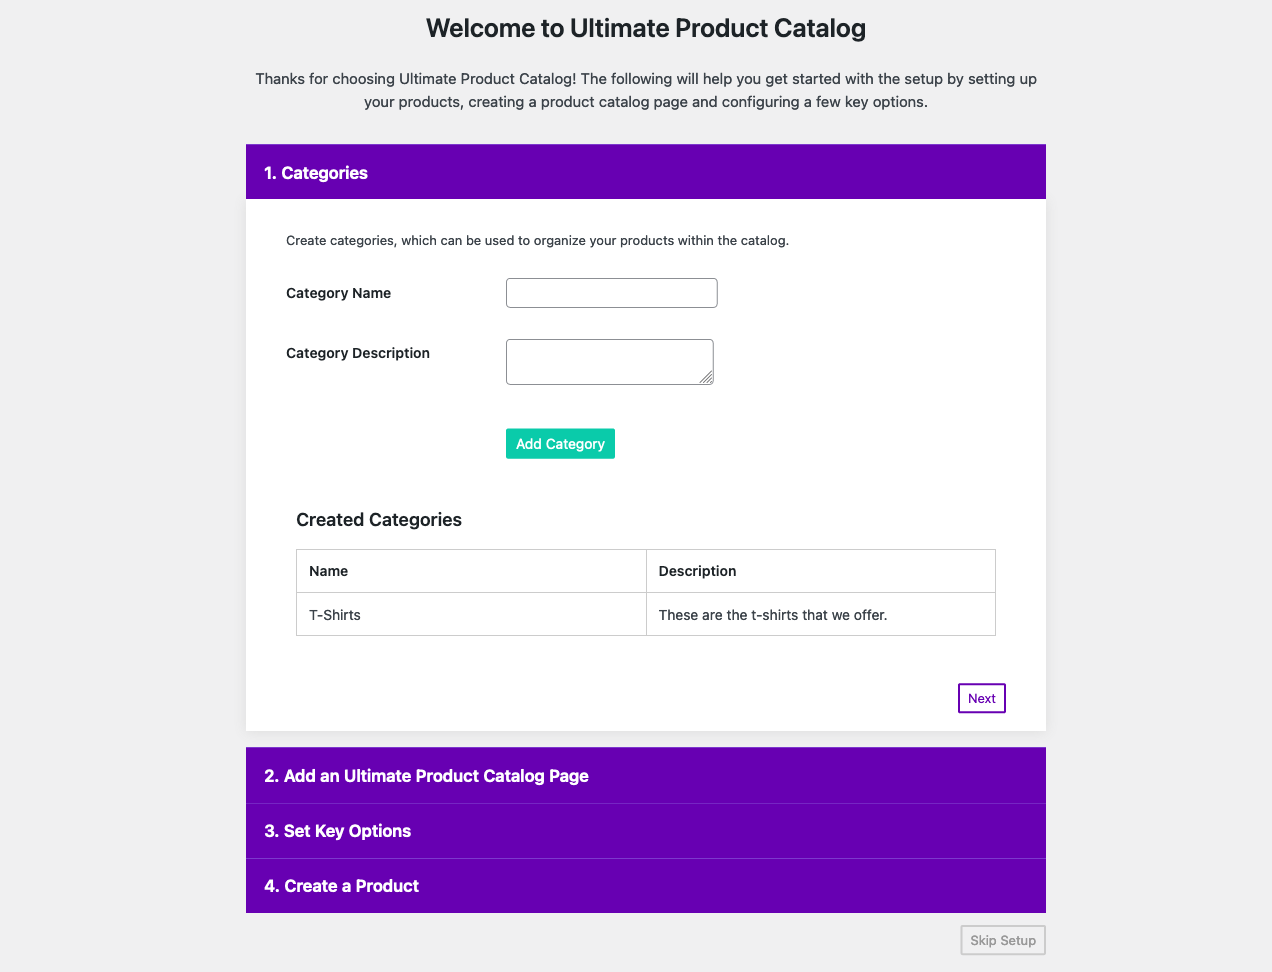 Screenshot of Ultimate Product Catalog walk-through